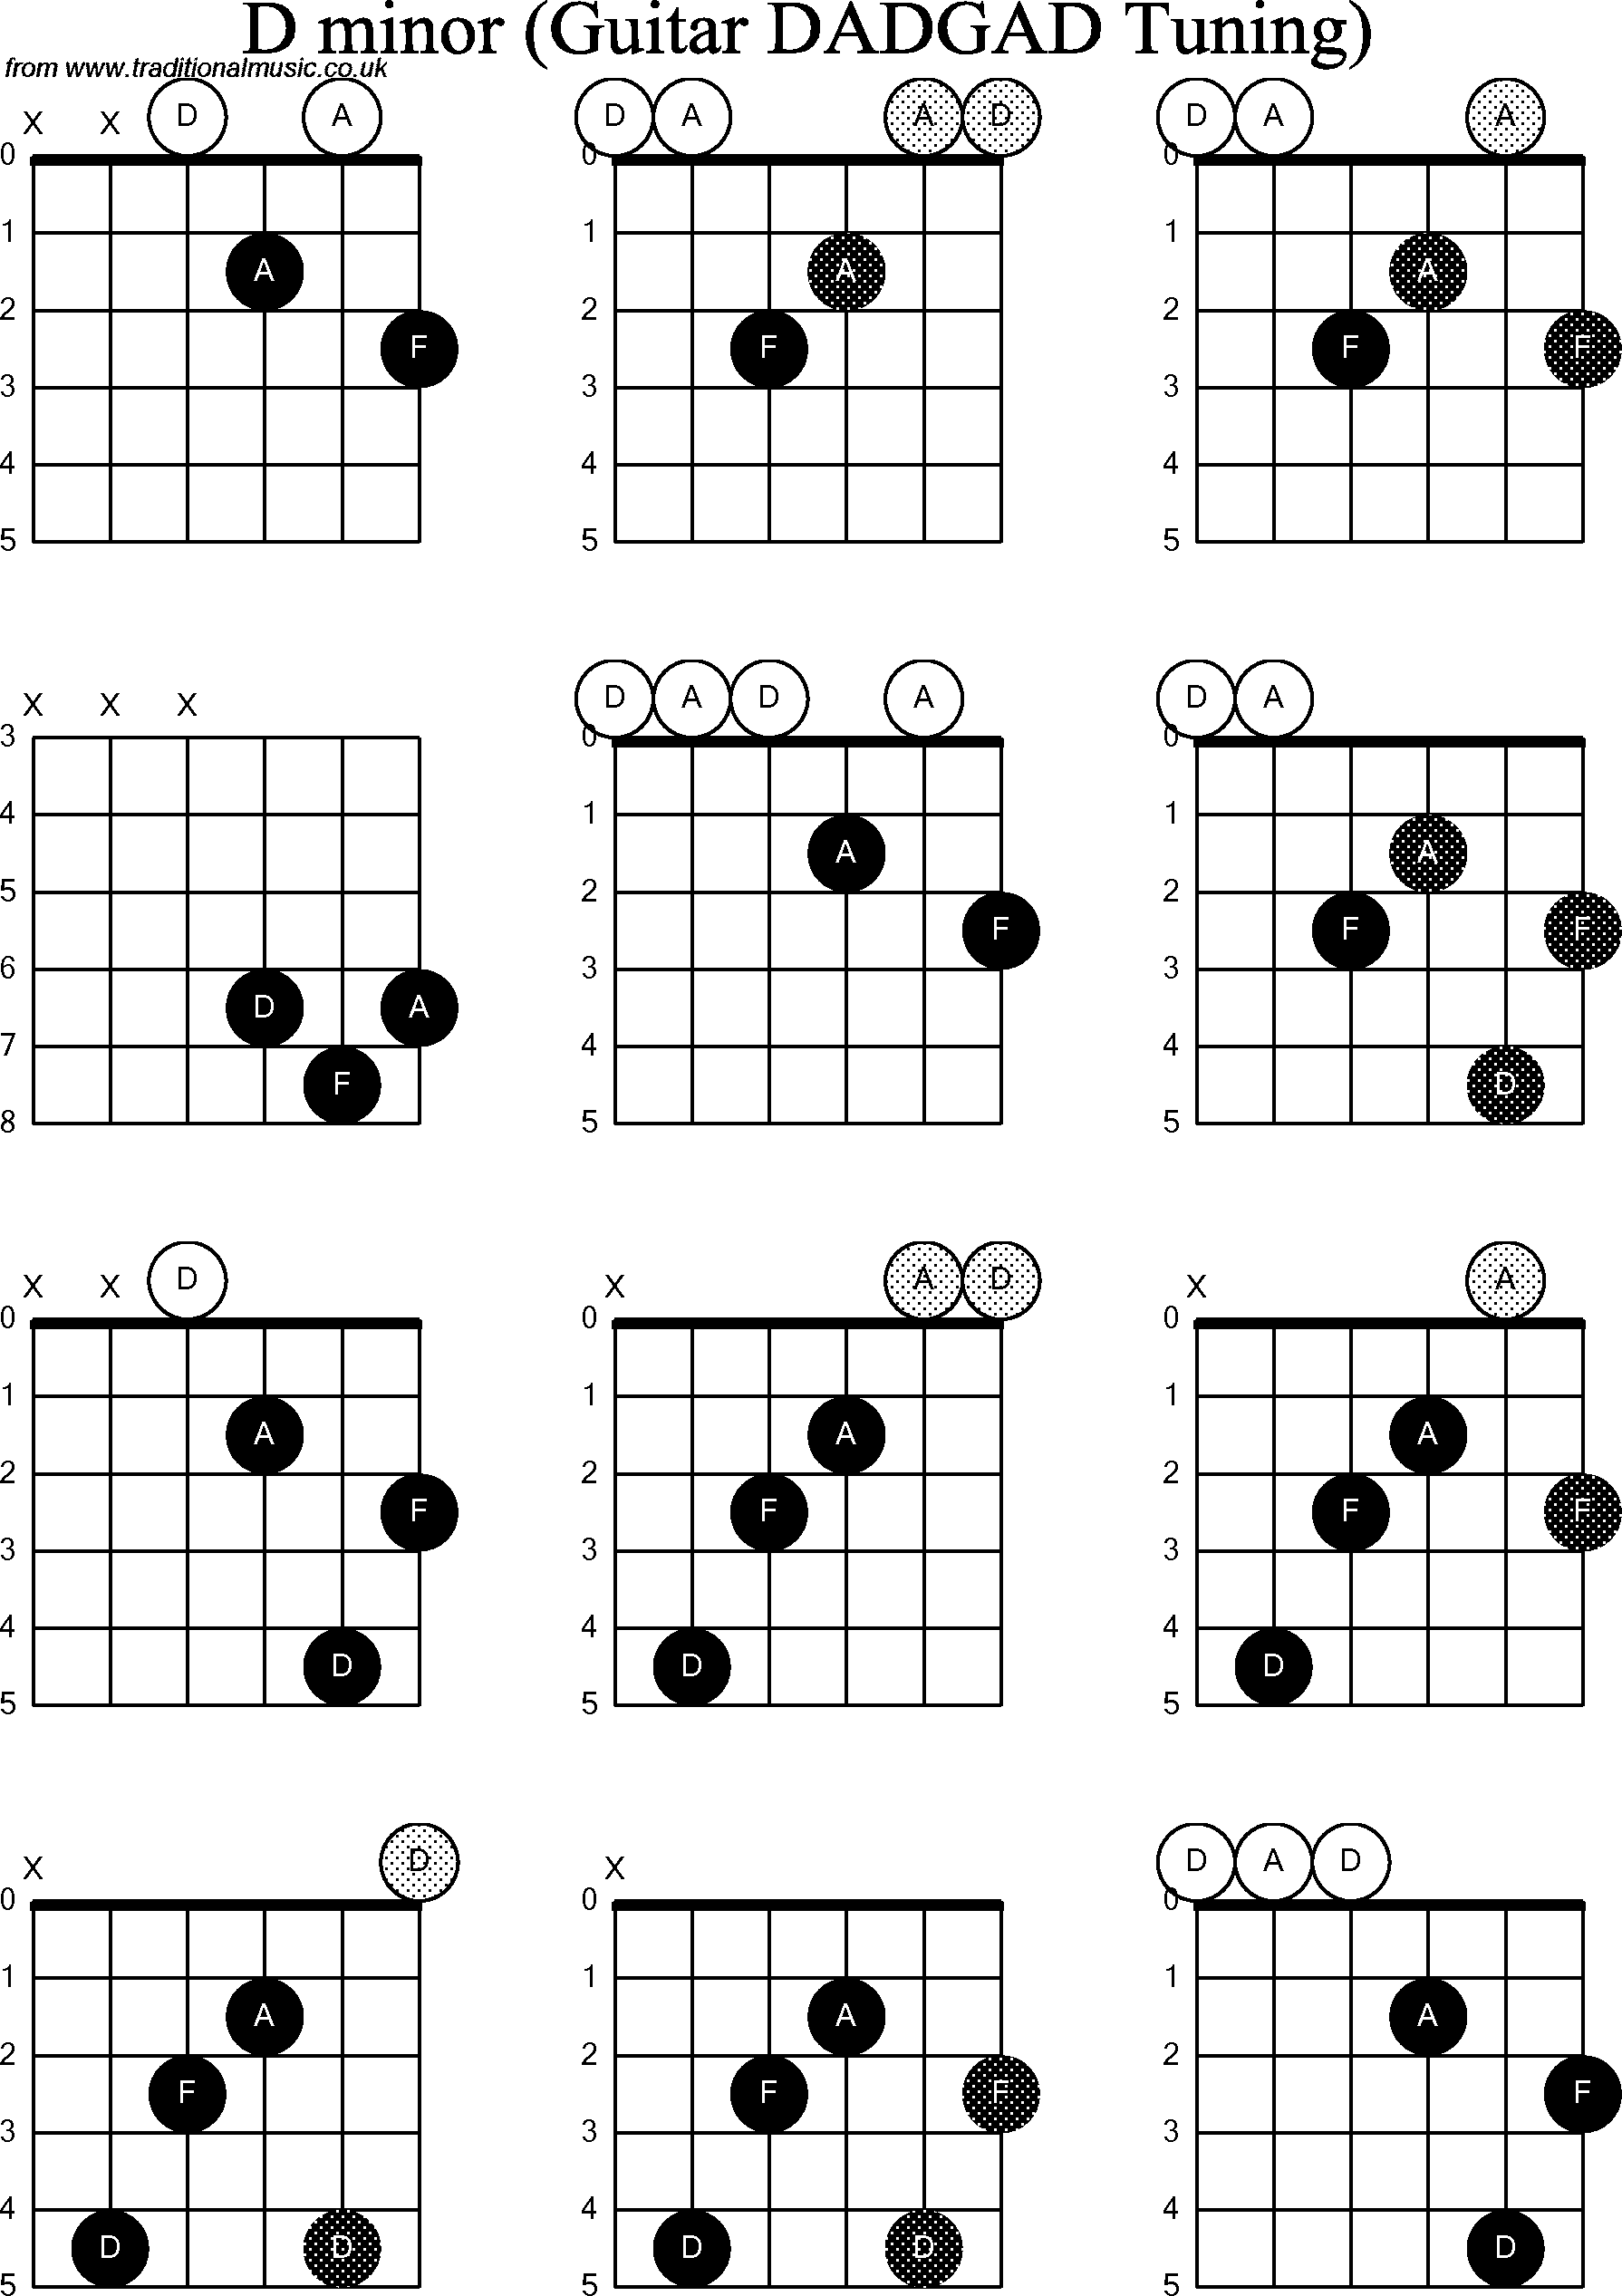 Chord Diagrams for D Modal Guitar(DADGAD), D Minor